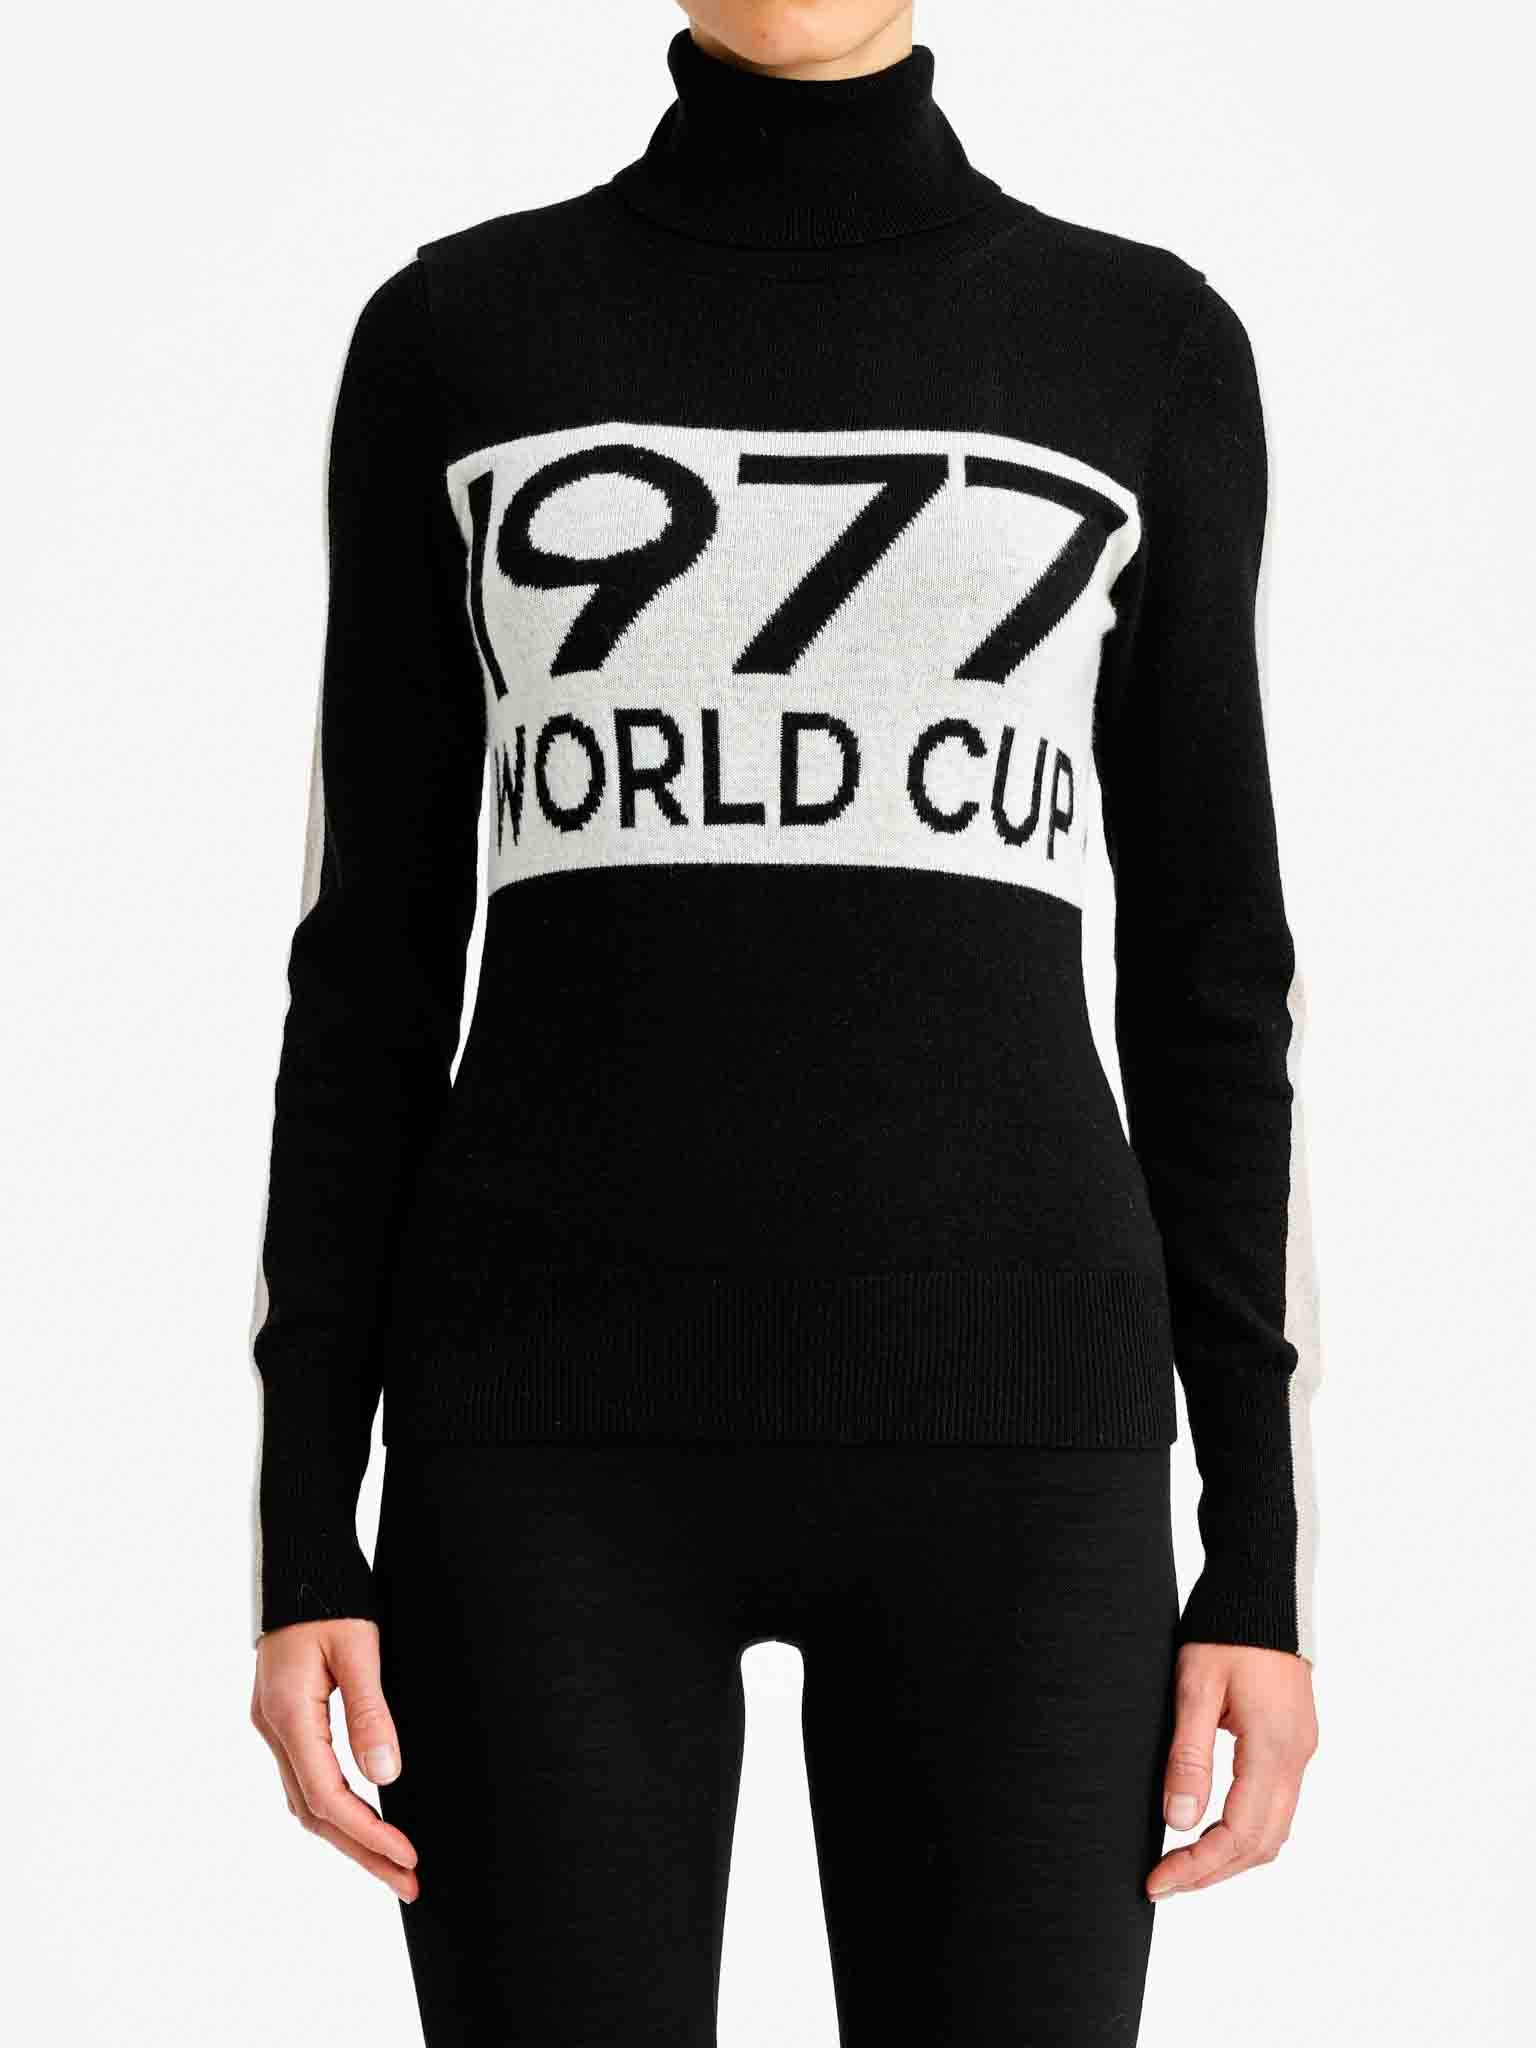 1977 World Cup Sweater Women Black